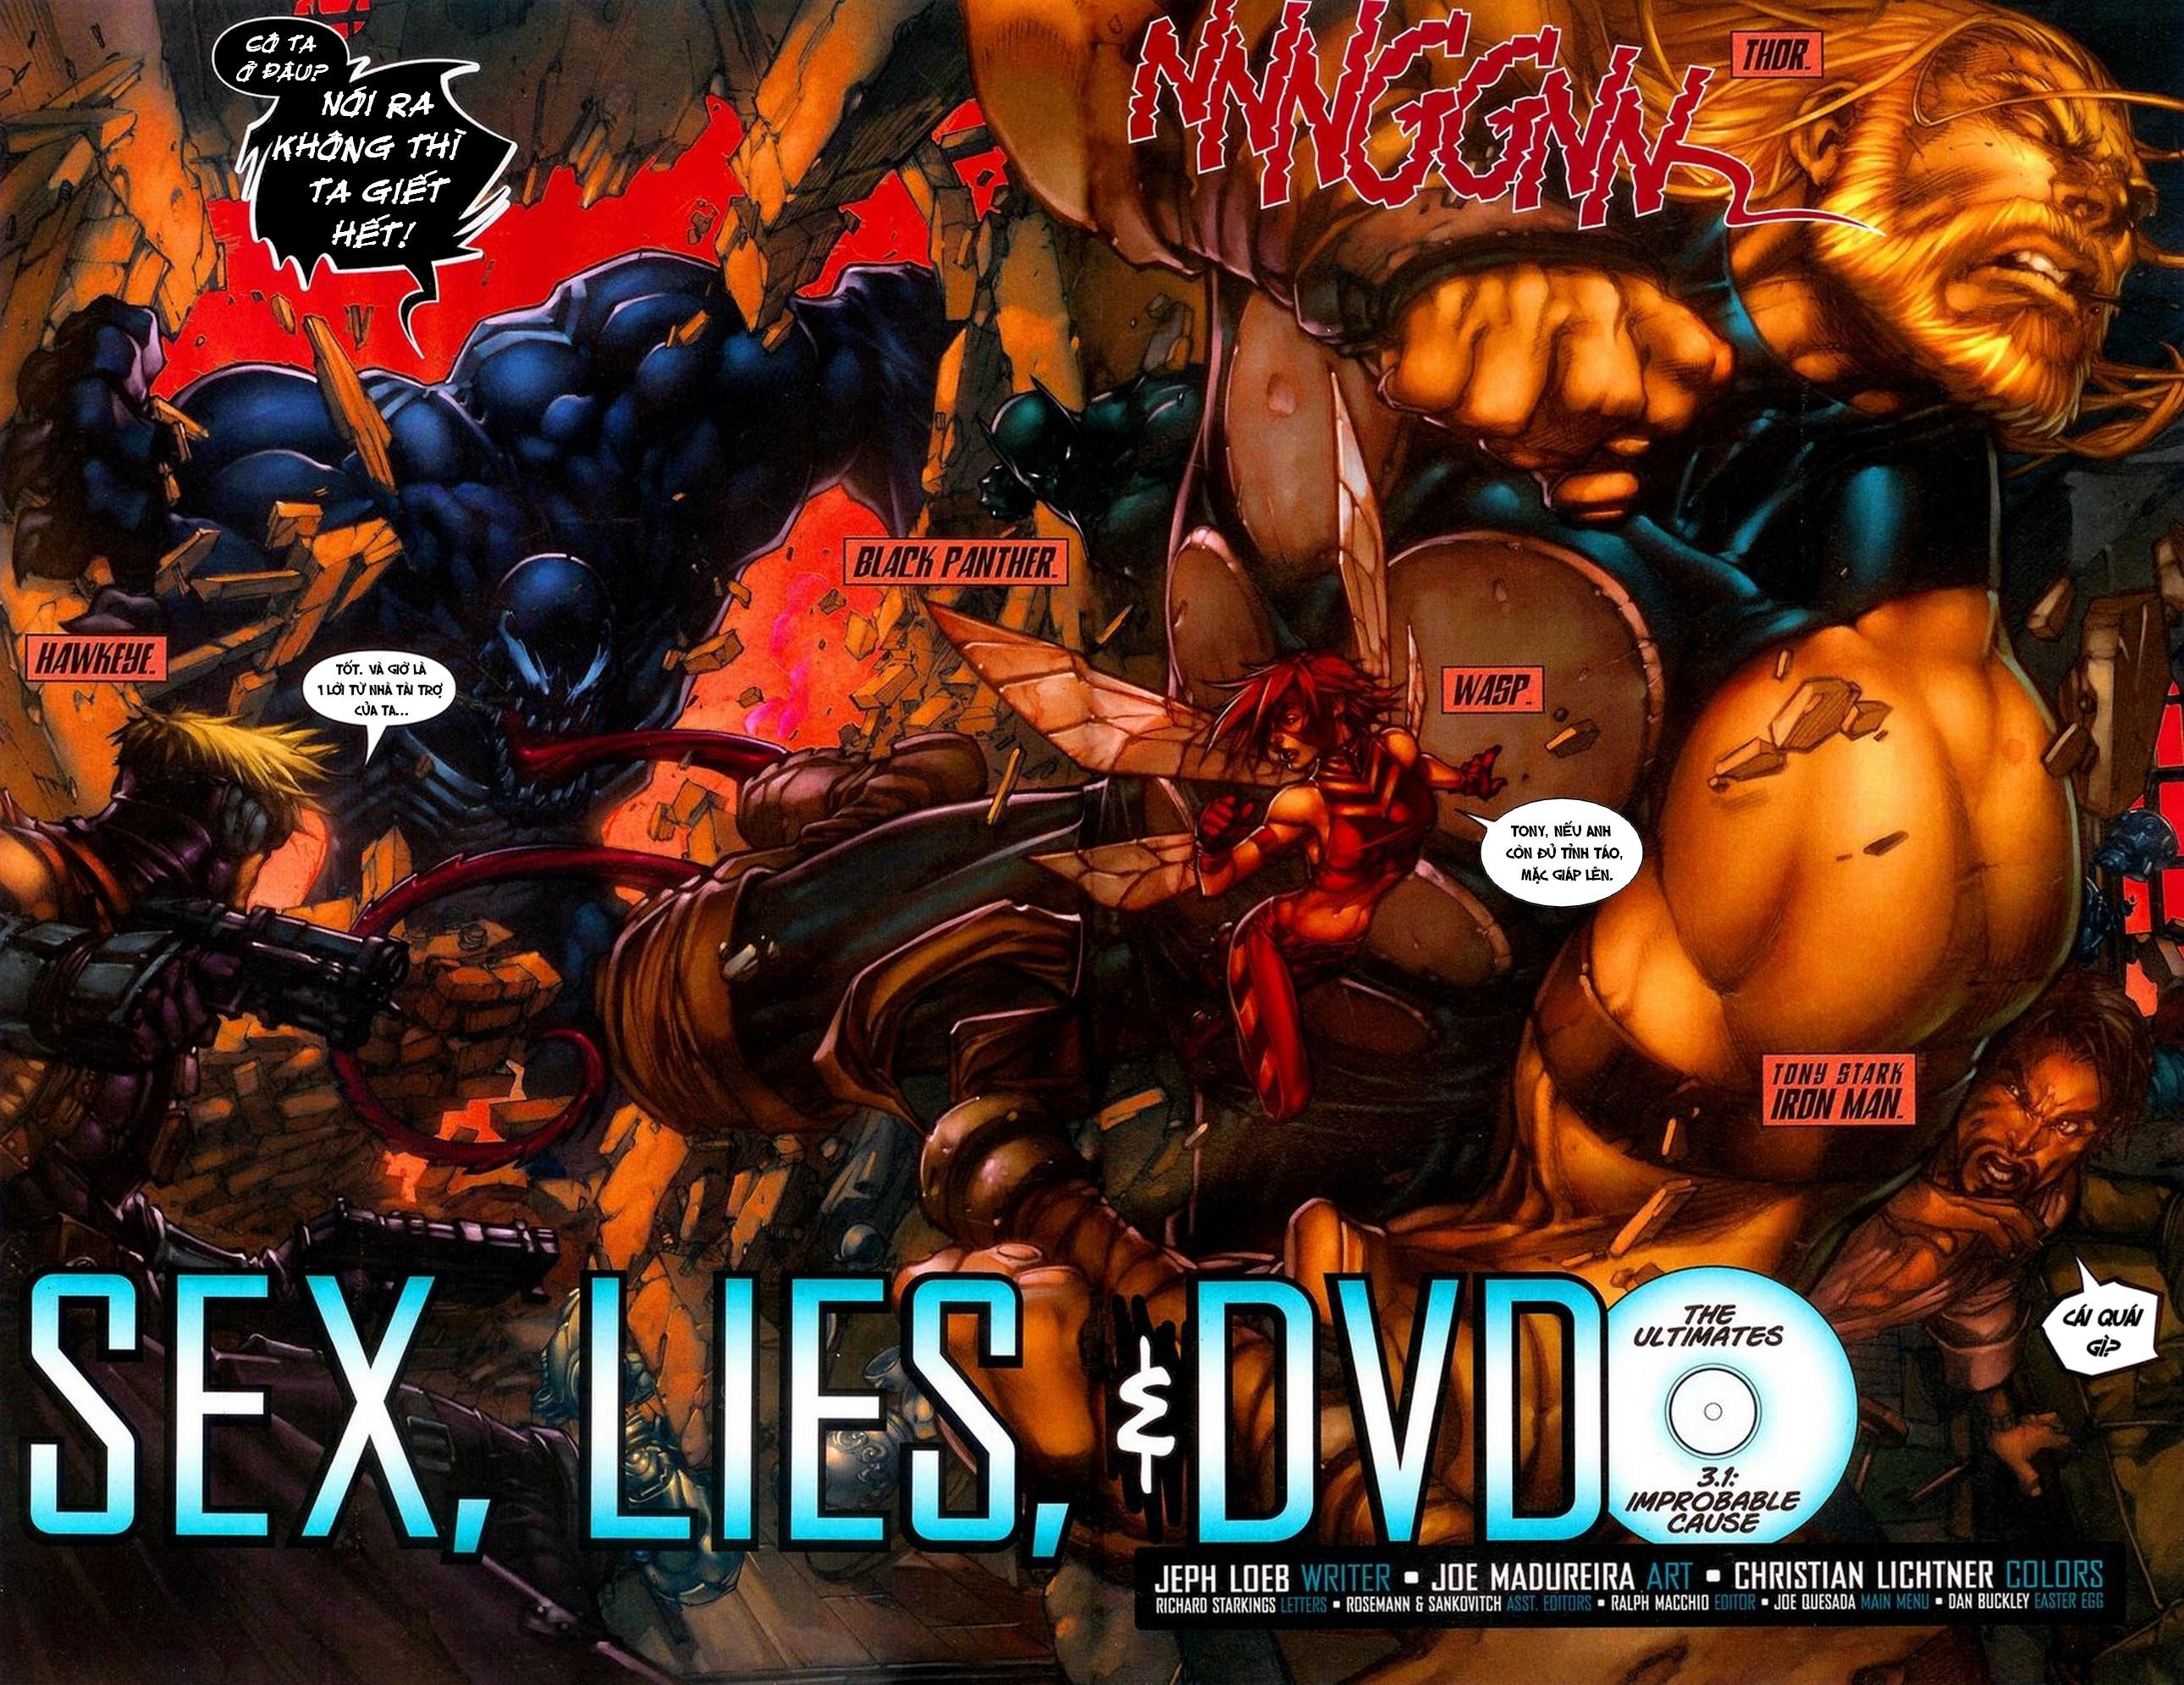 Black Panther Marvel Comics Hawkeye Marvel Comics T 039 Challa Thor Tony Stark Venom Wasp Marvel Com 2580x1990